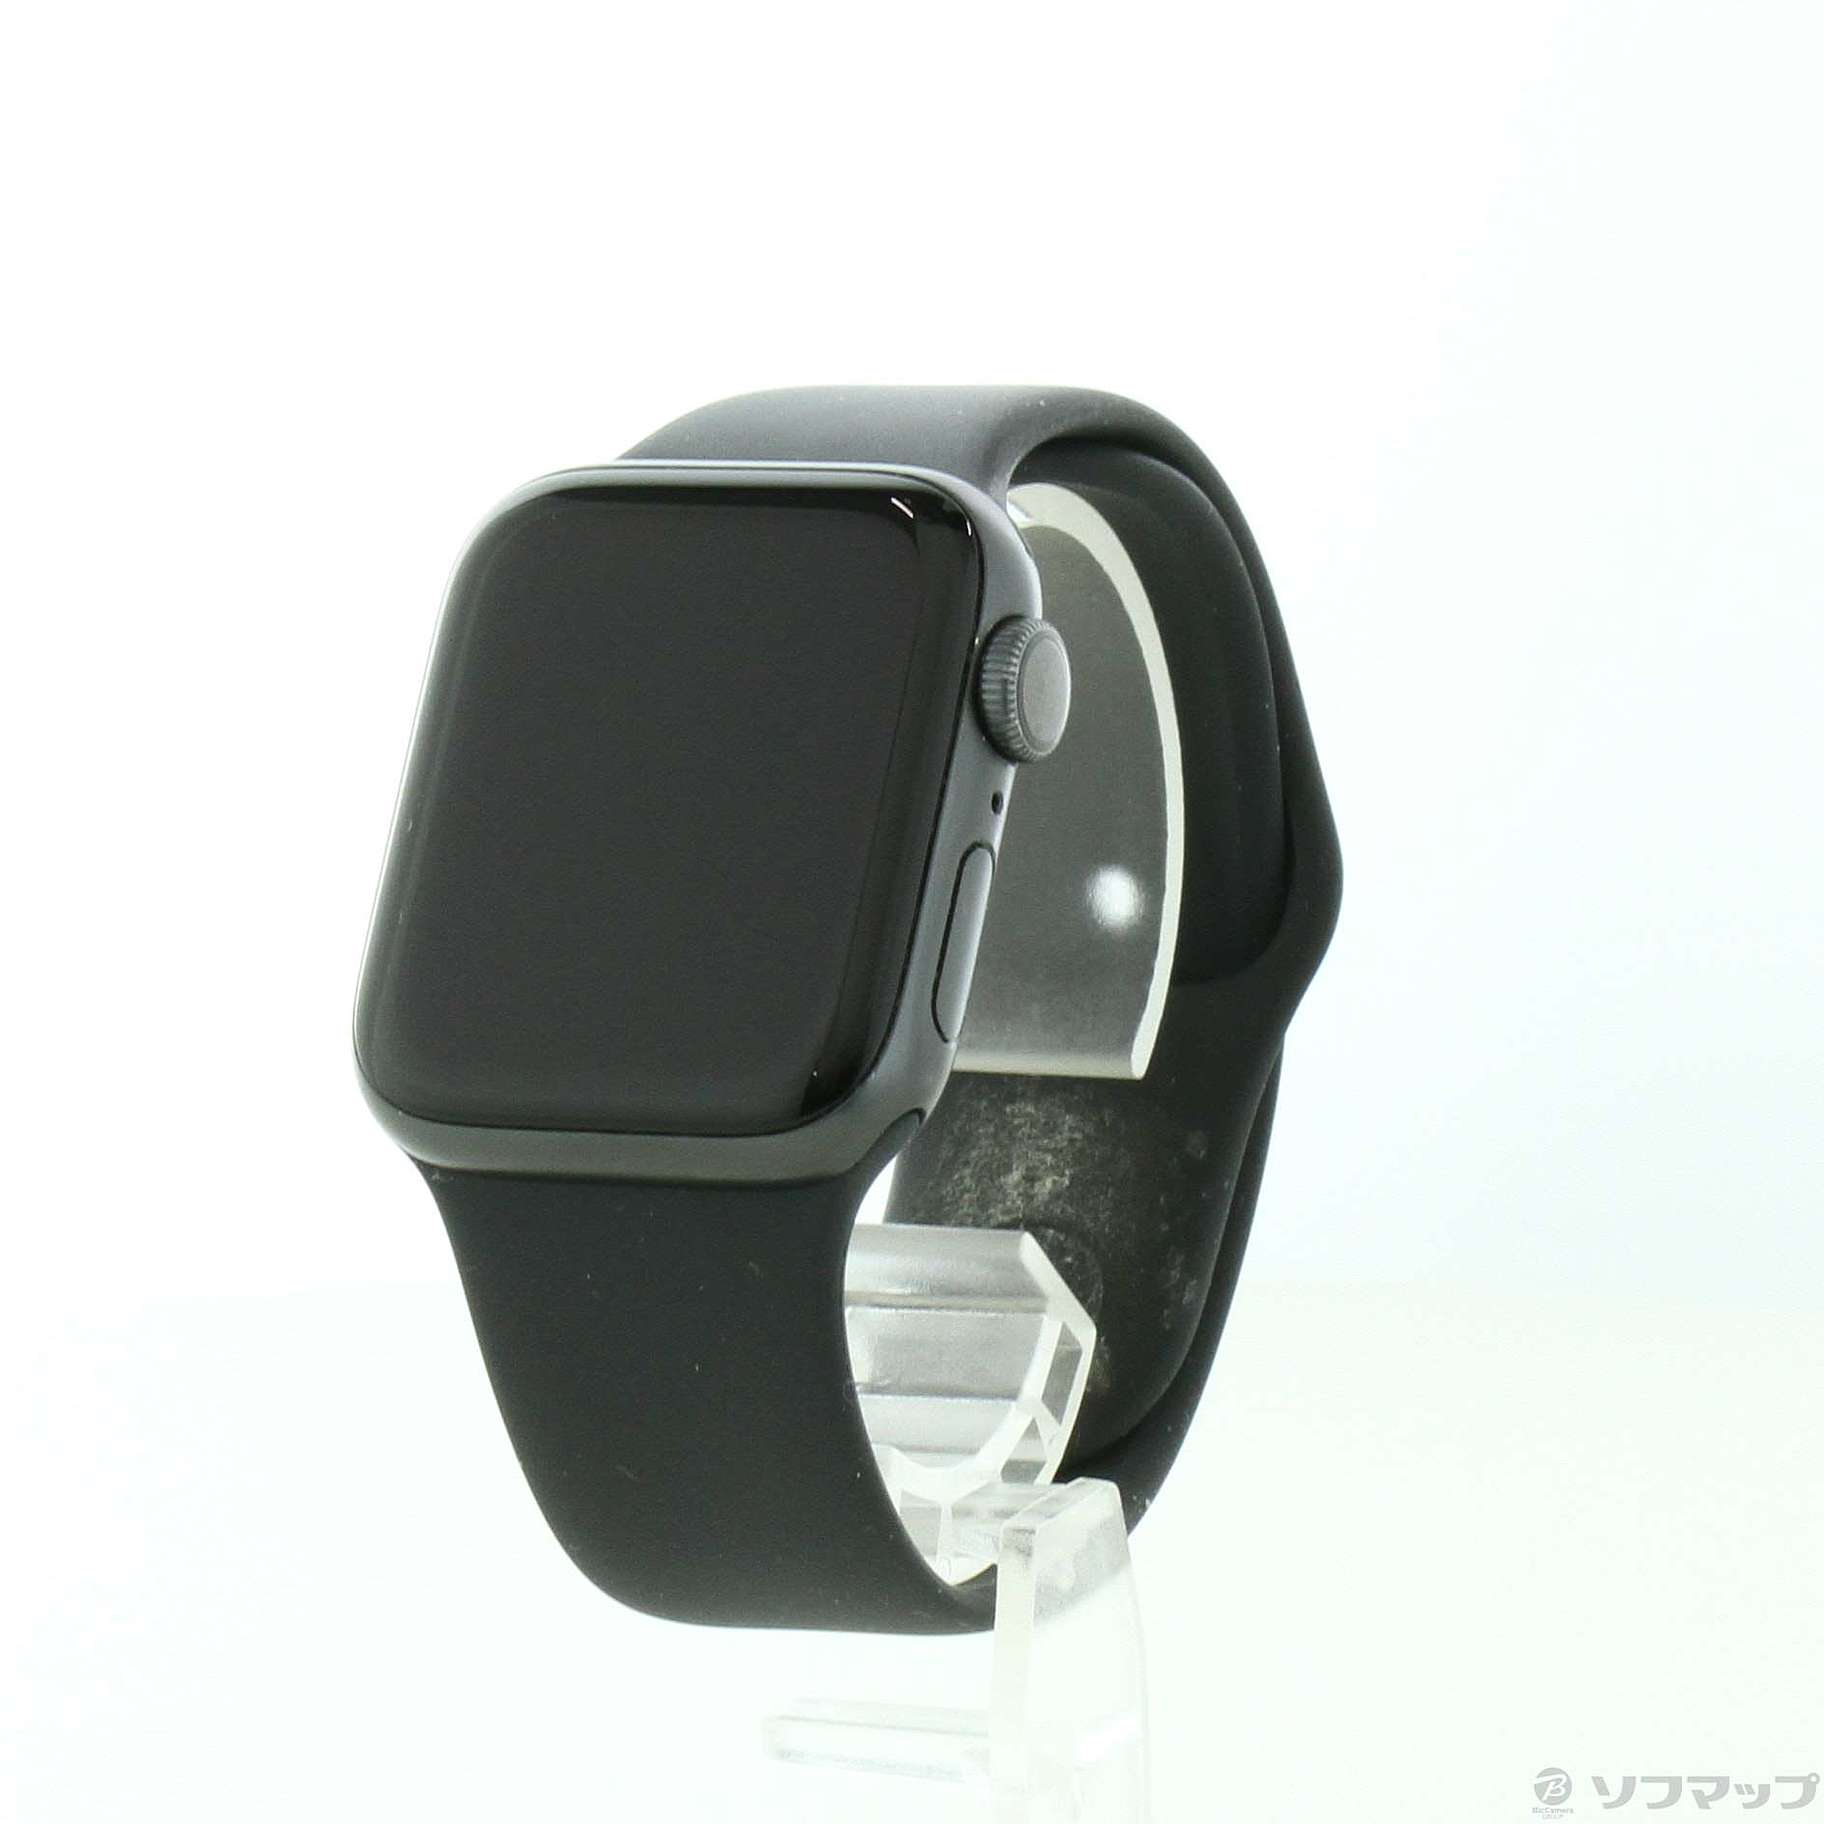 Apple Watch Series 5 40mm gps space gray